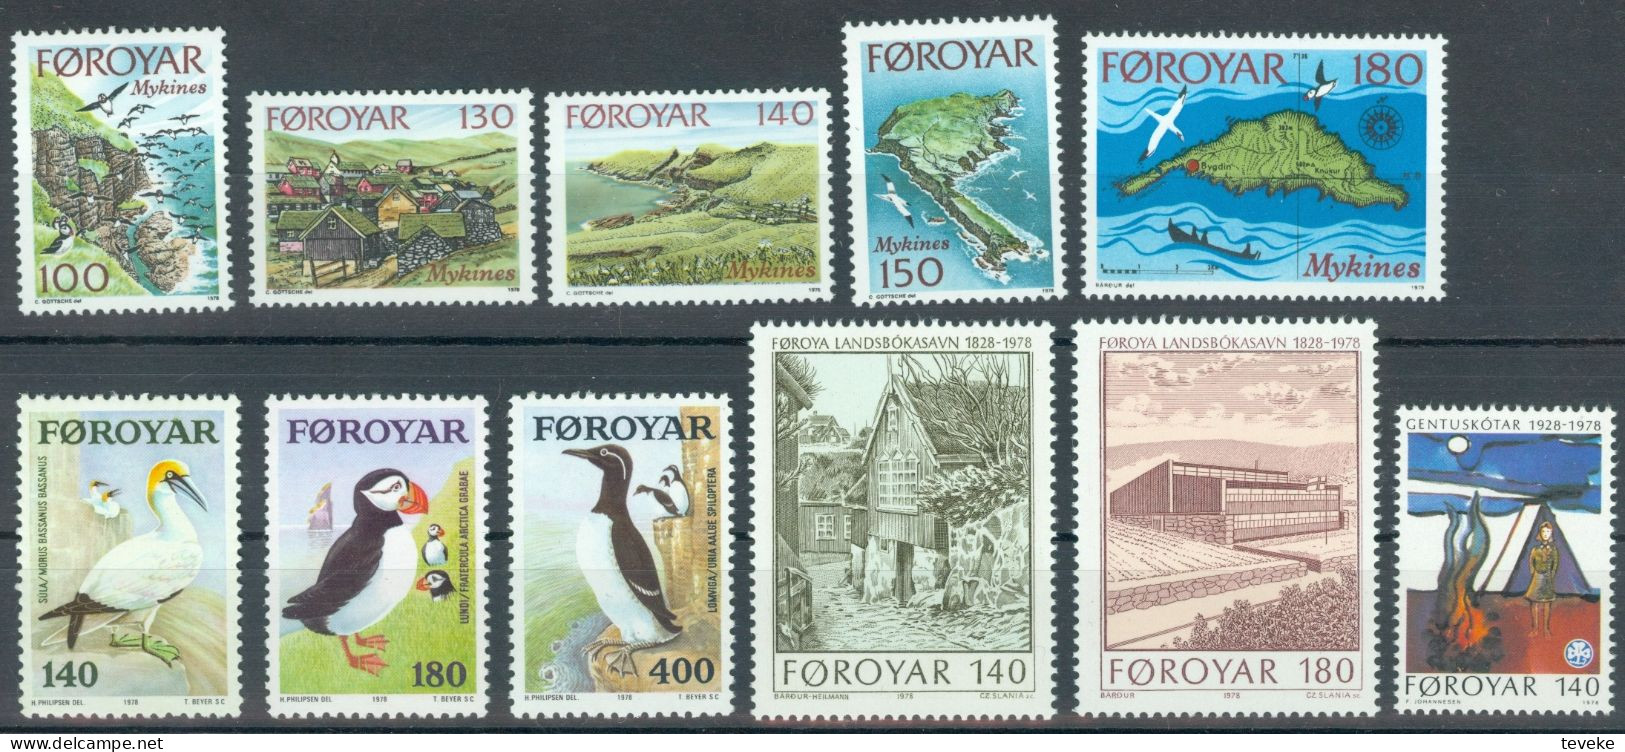 FAEROËR 1978 - MiNr. 31/41 - **/MNH - YEARSET - Faroe Islands